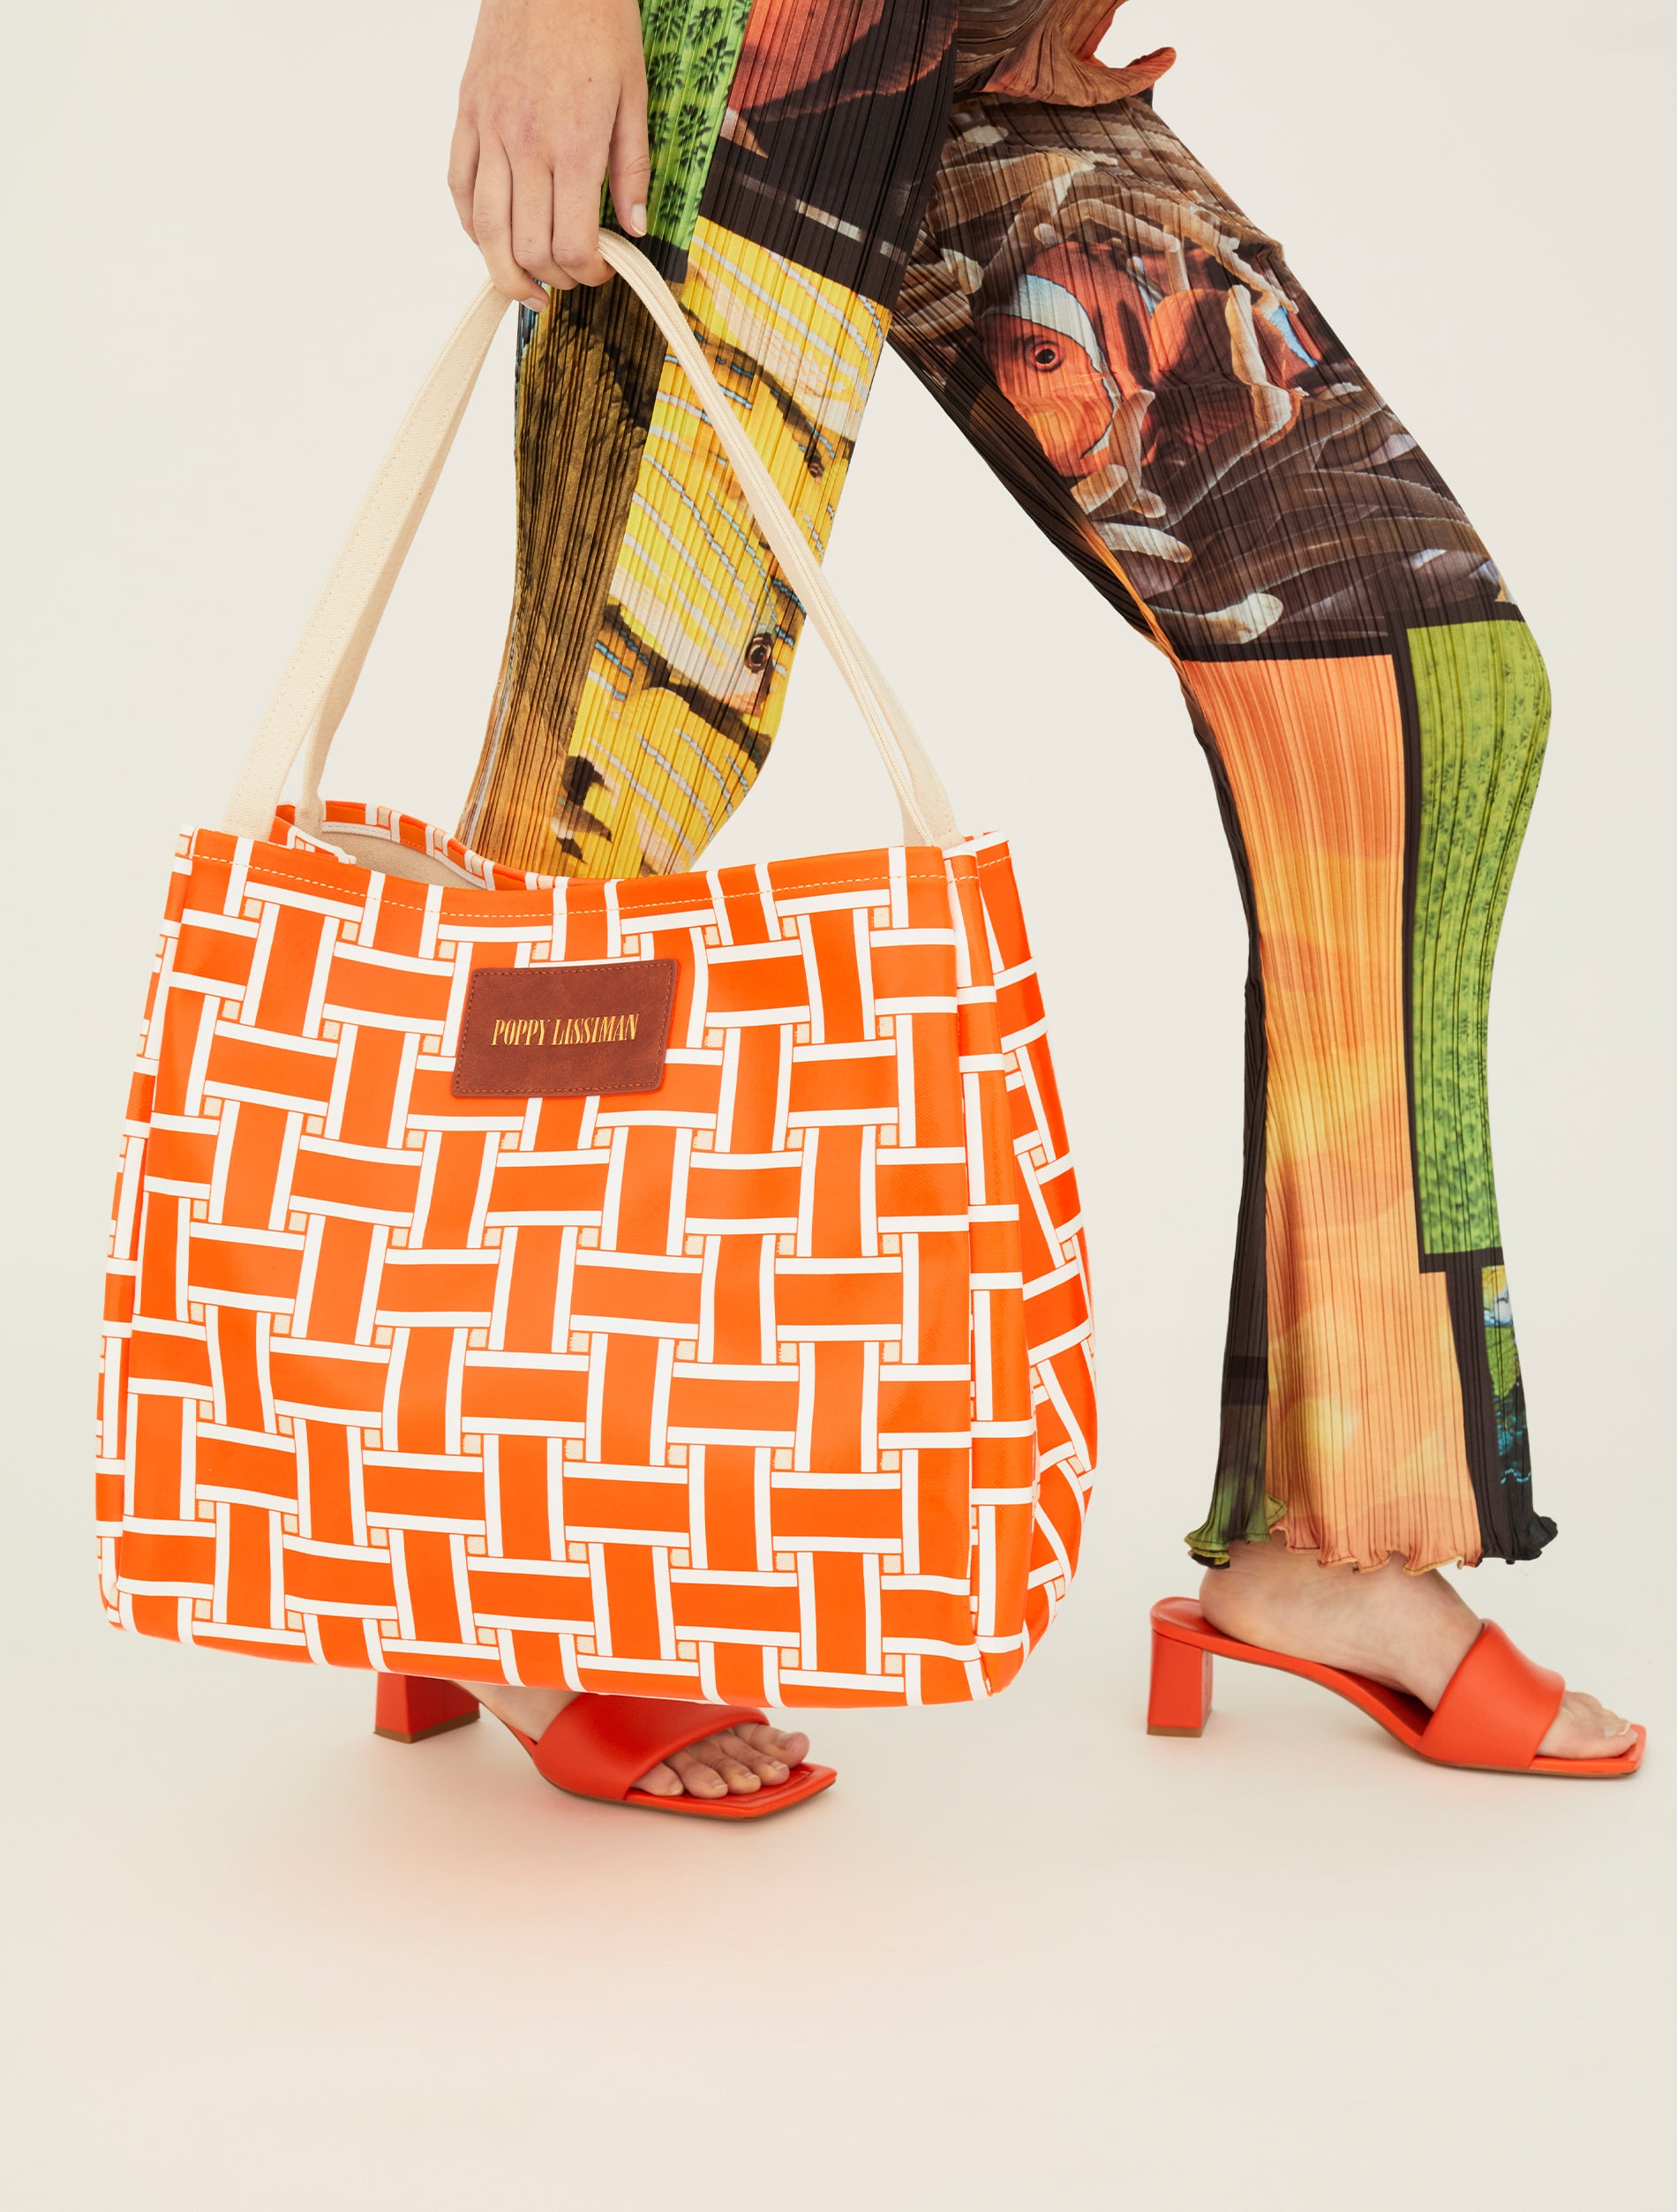 Twist Knitting Tote Bag - Orange - Shop Relaxedship Handbags